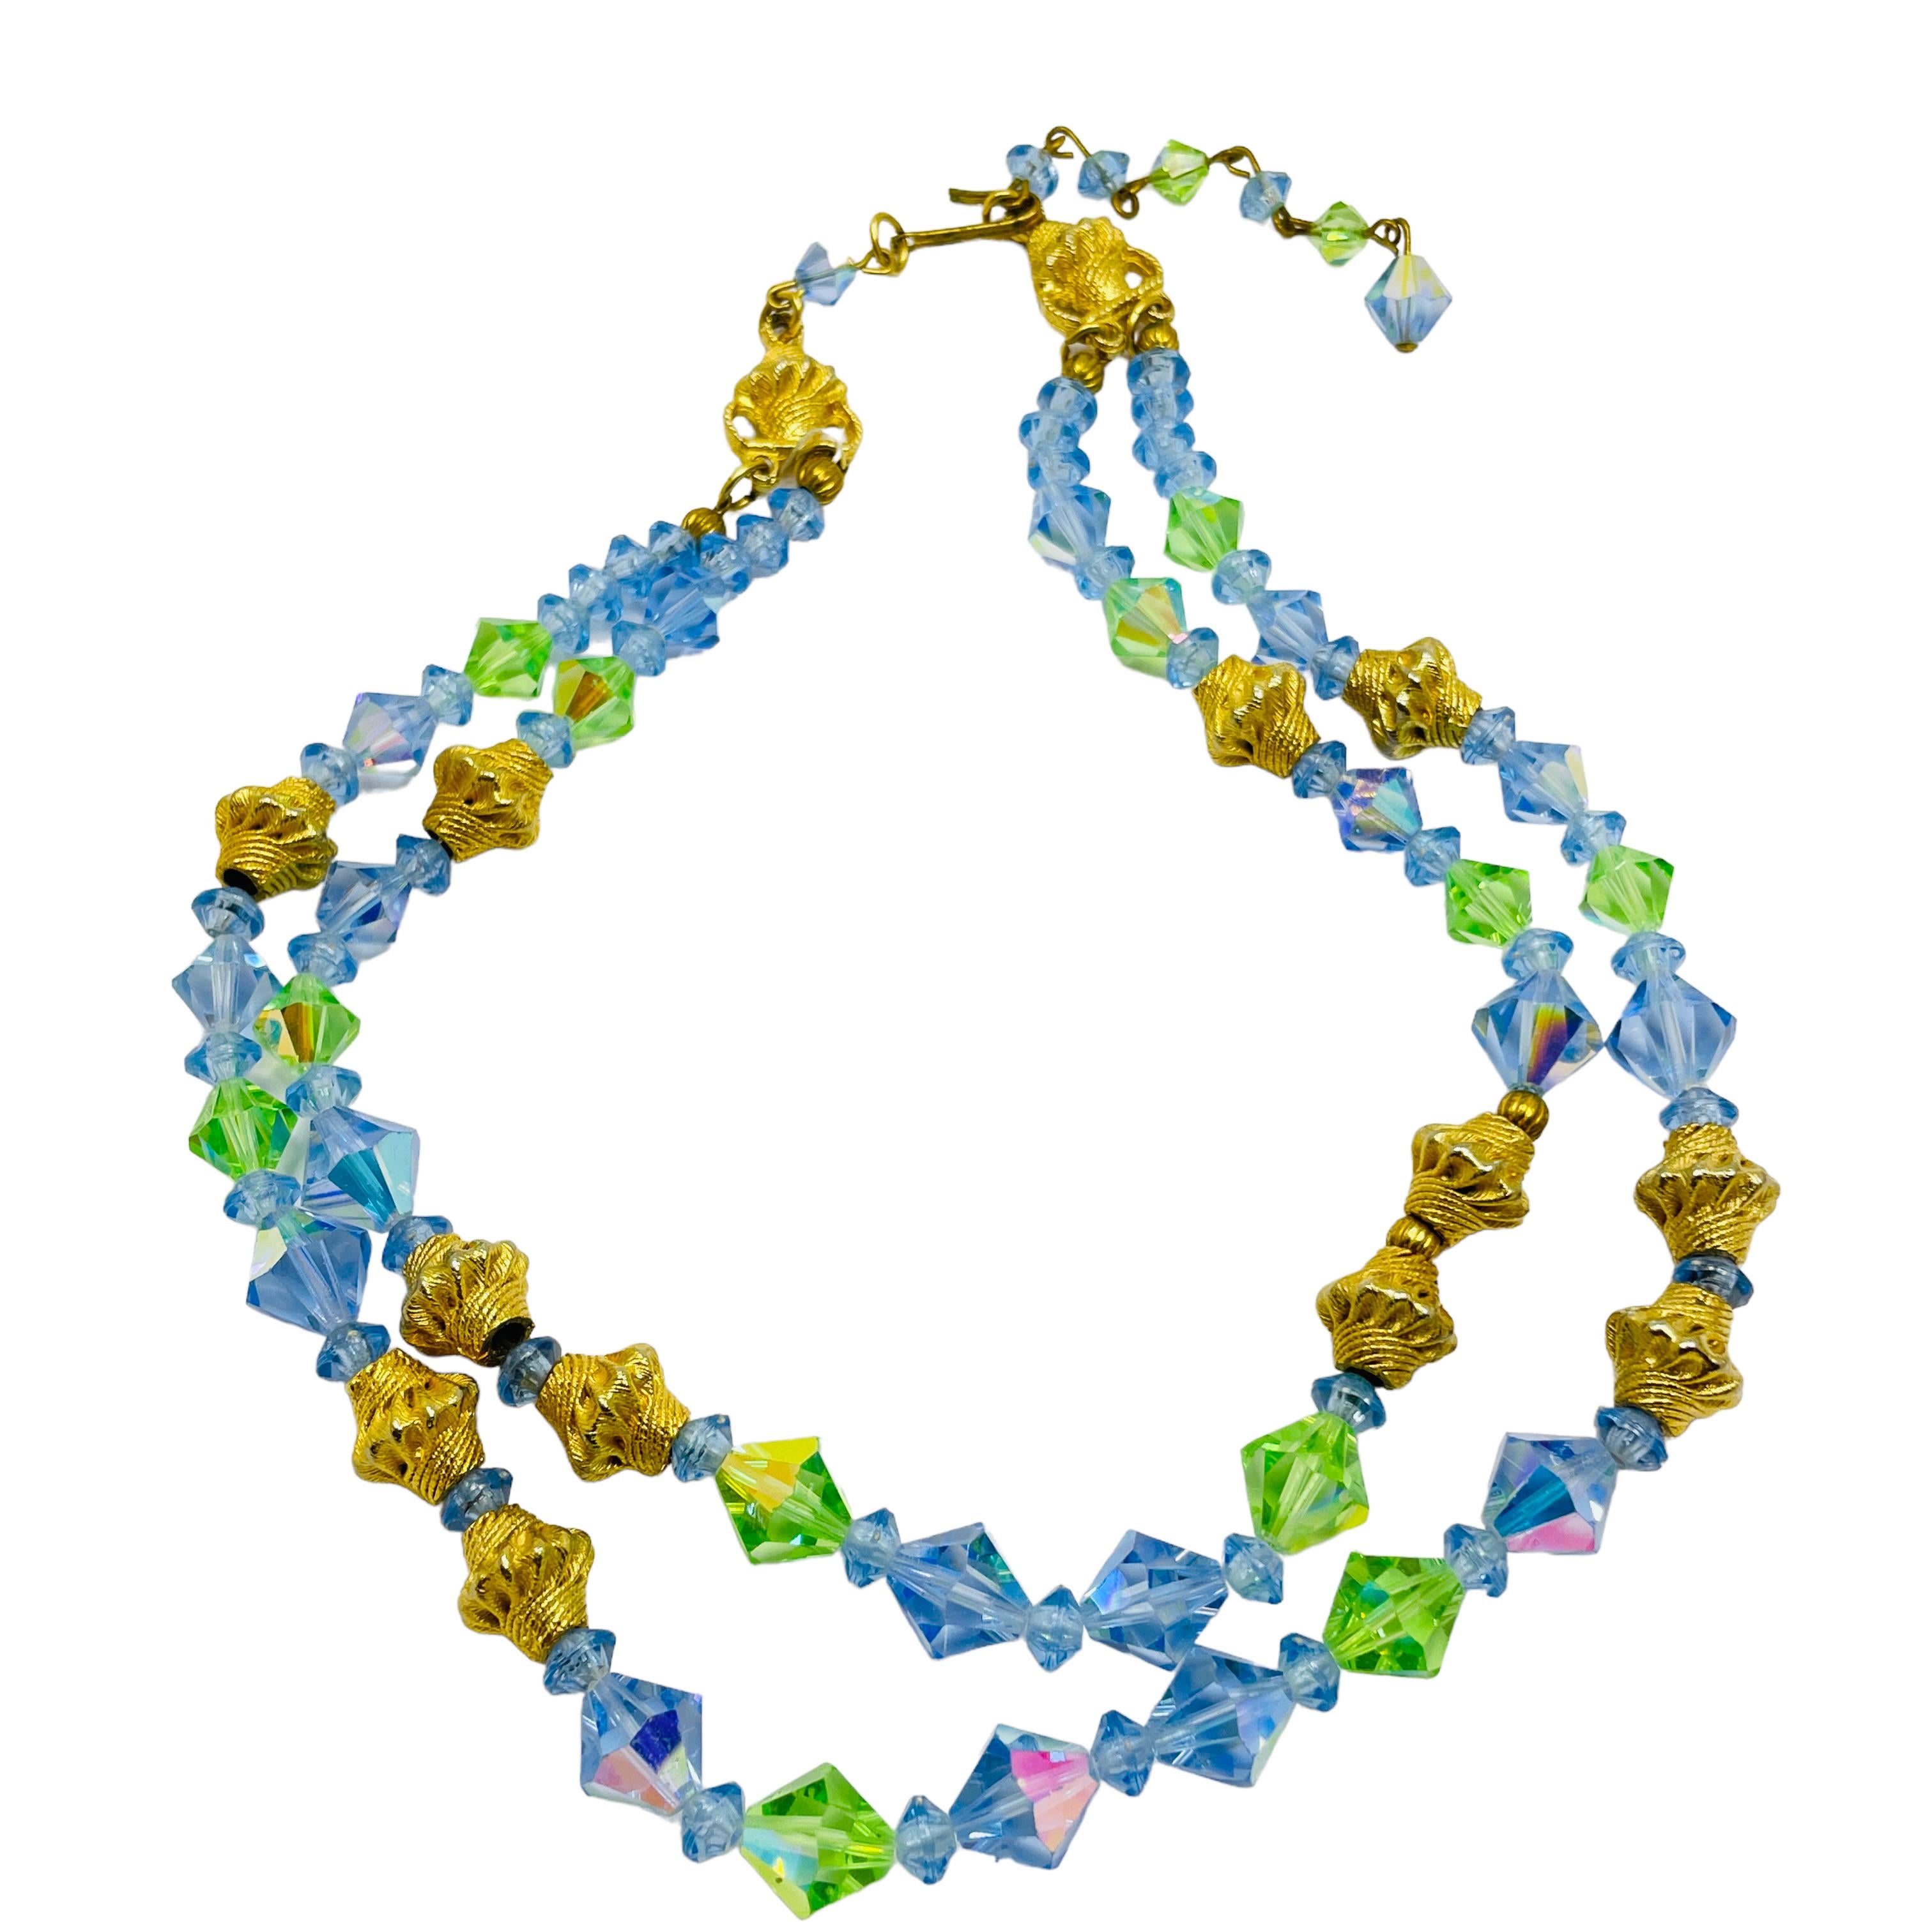 DETAILS

• unsigned 

• gold tone glass beads

• vintage designer necklace

MEASUREMENTS

• 32